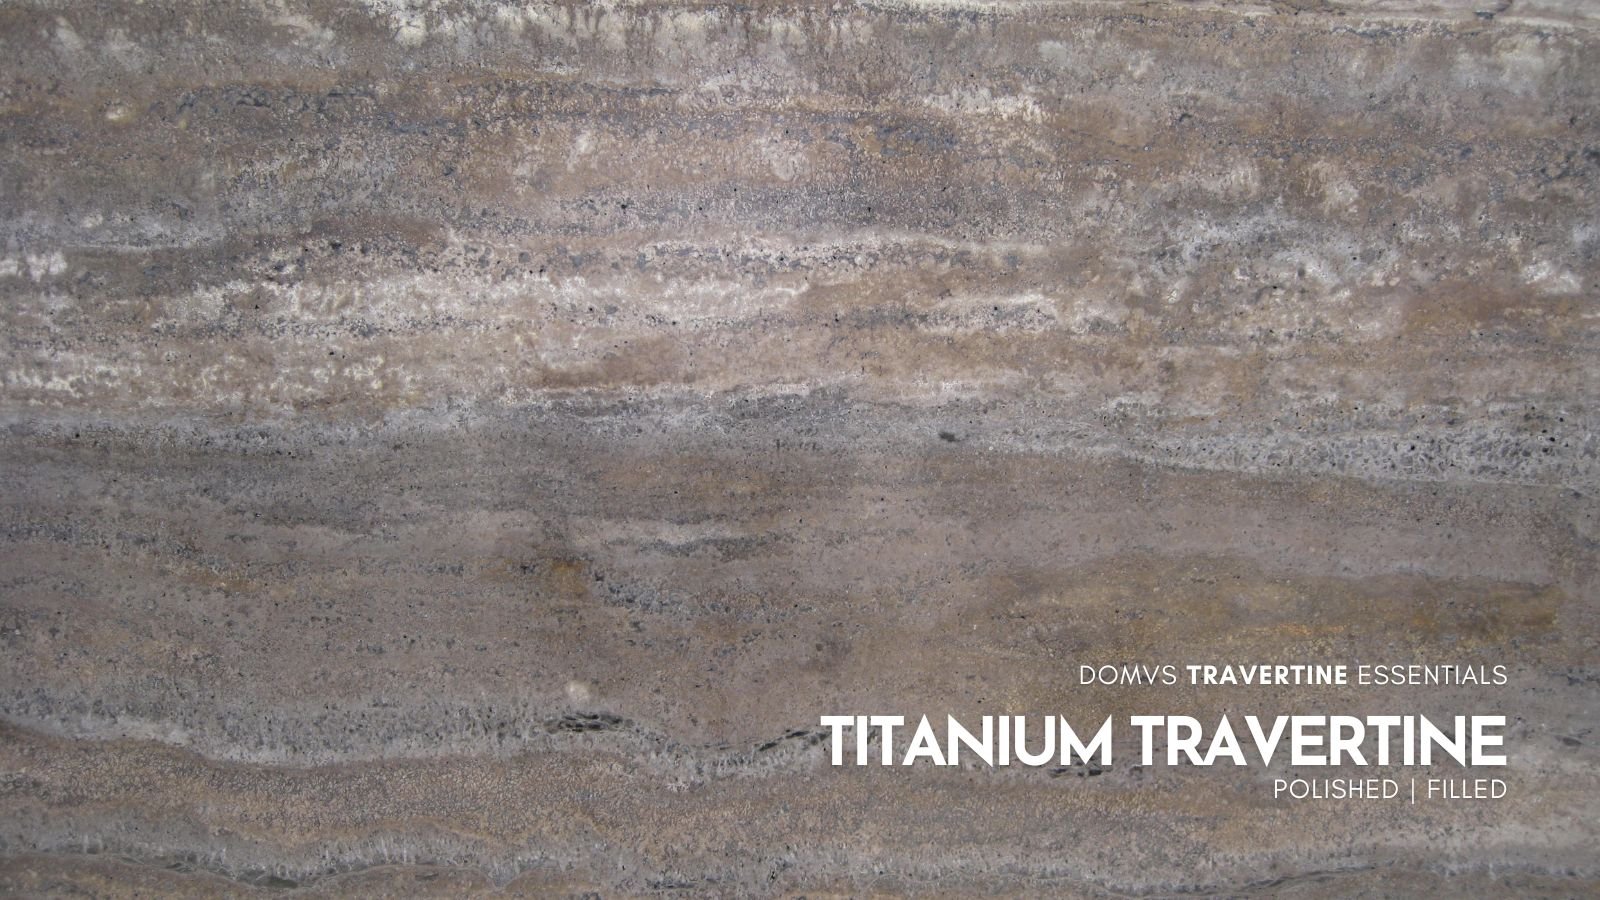 TITANIUM TRAVERTINE HONED FILLED 116 X 69 X 2CMBV DOMVS SURFACES.jpg